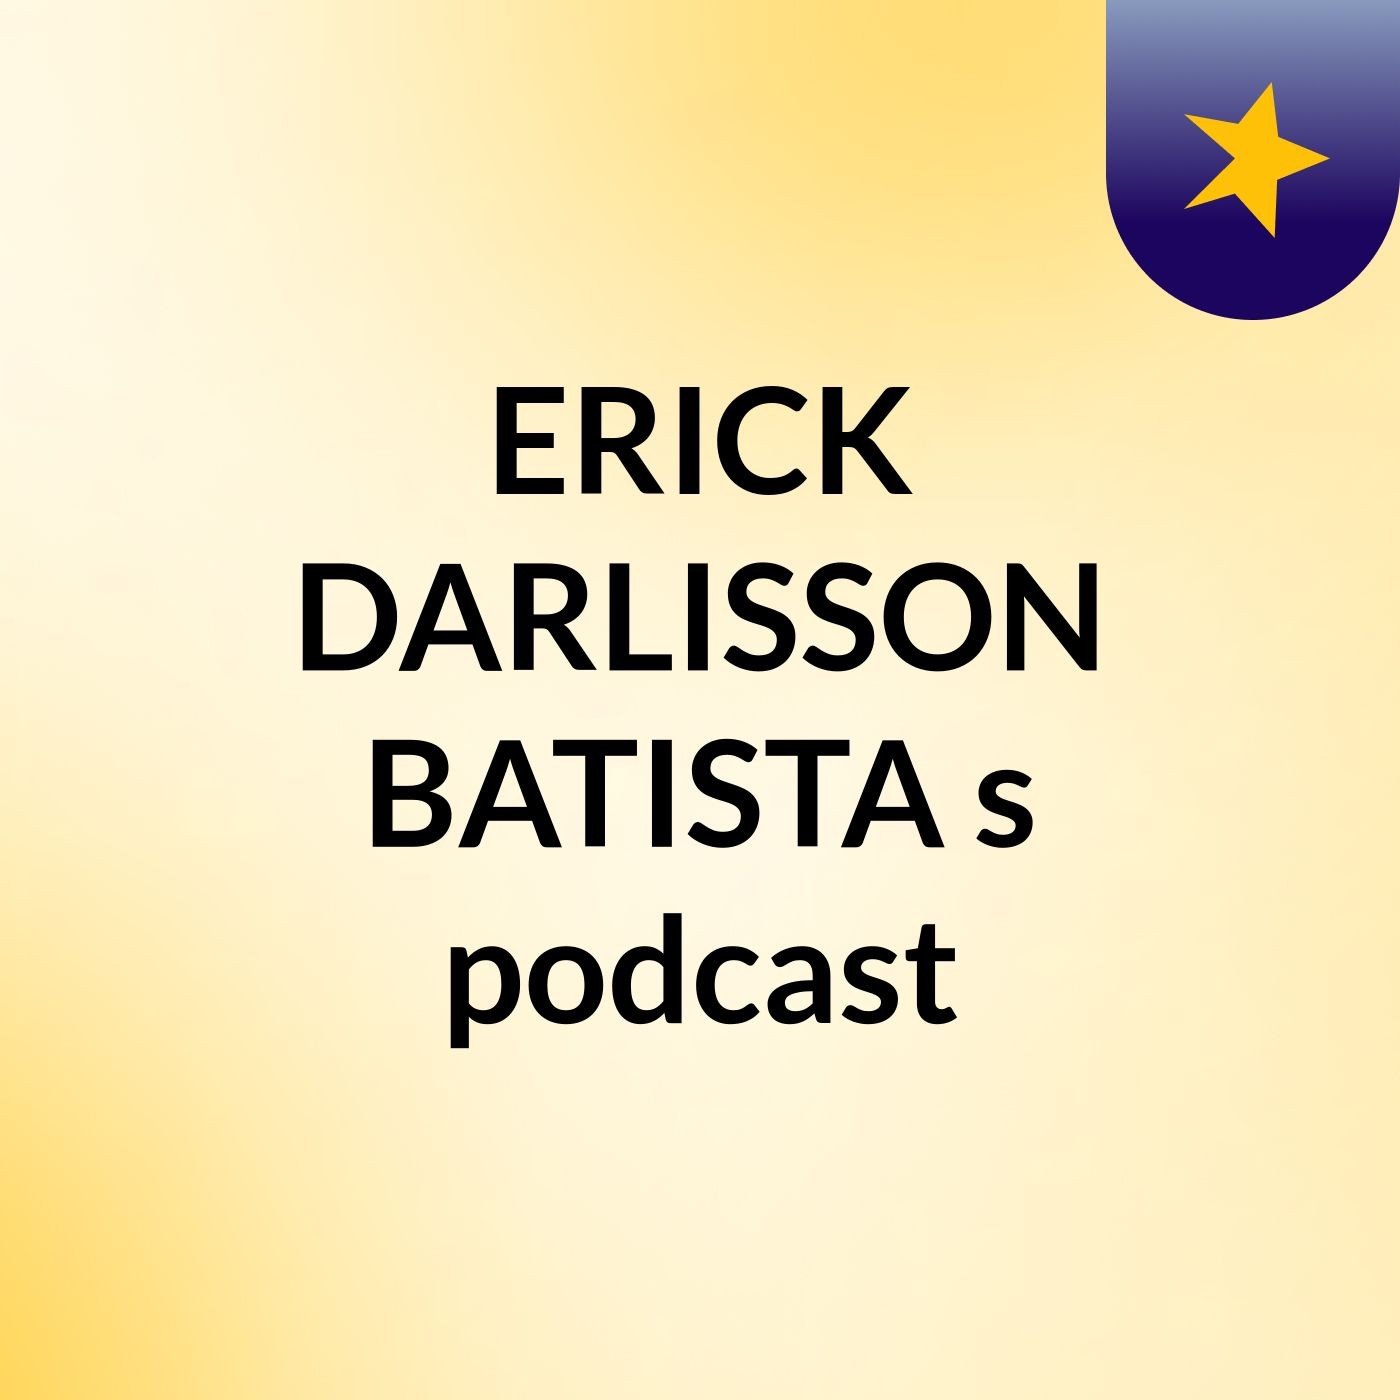 ERICK DARLISSON BATISTA's podcast